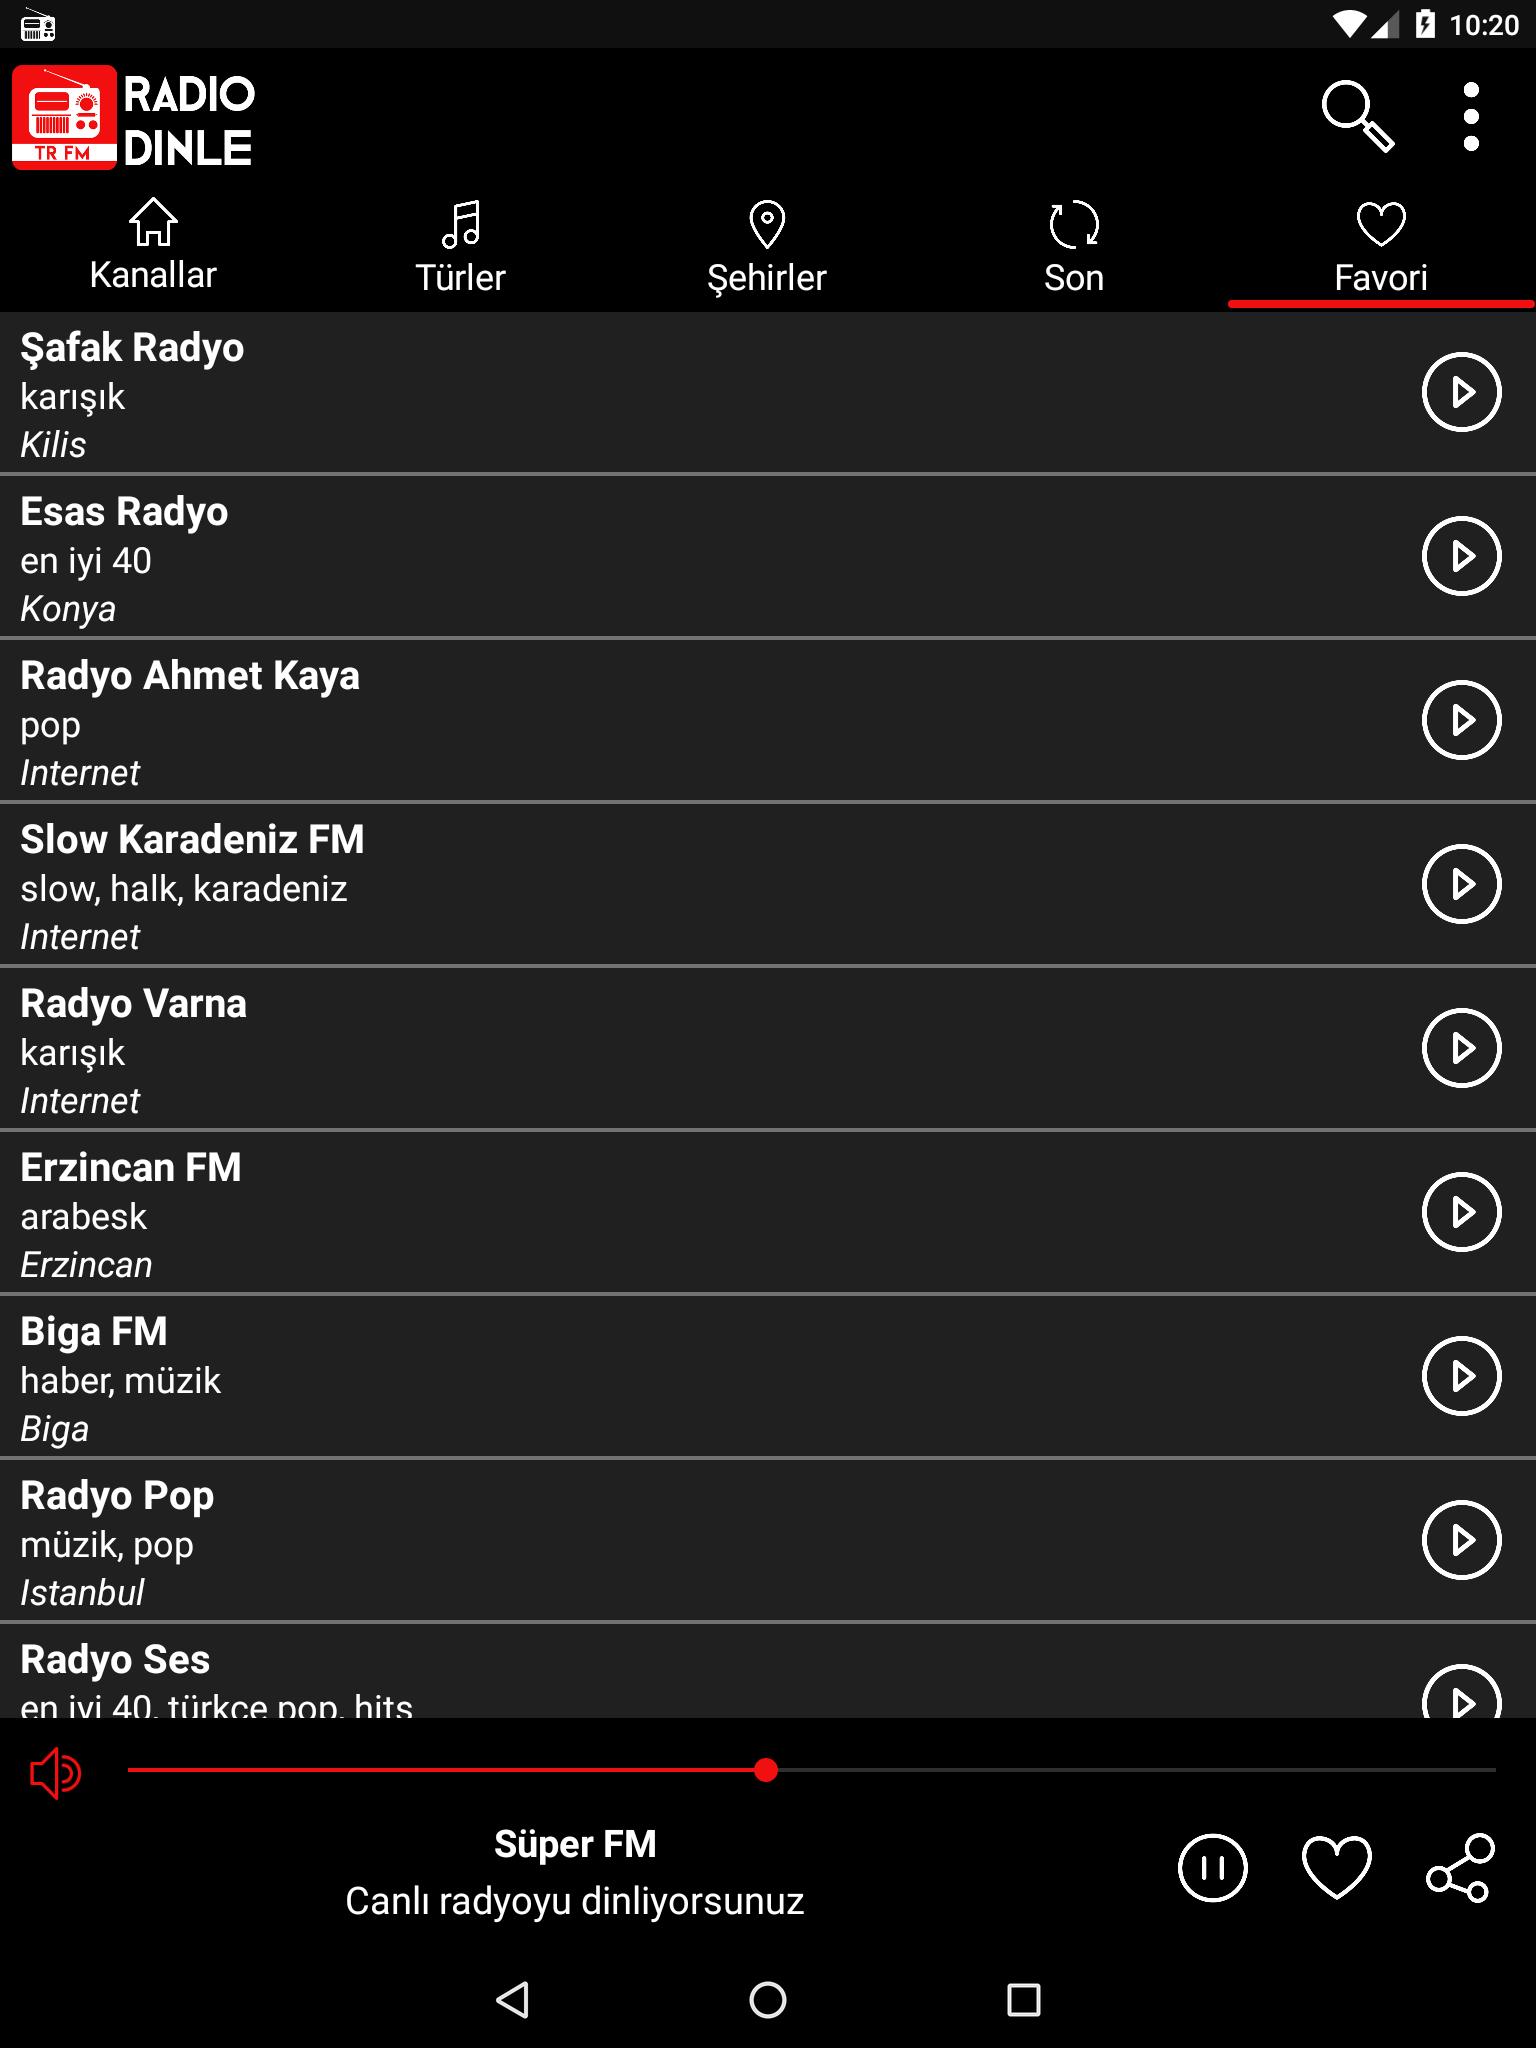 Canlı Radyo Dinle-FM Radyo-Ücretsiz Radyo Dinle for Android - APK Download